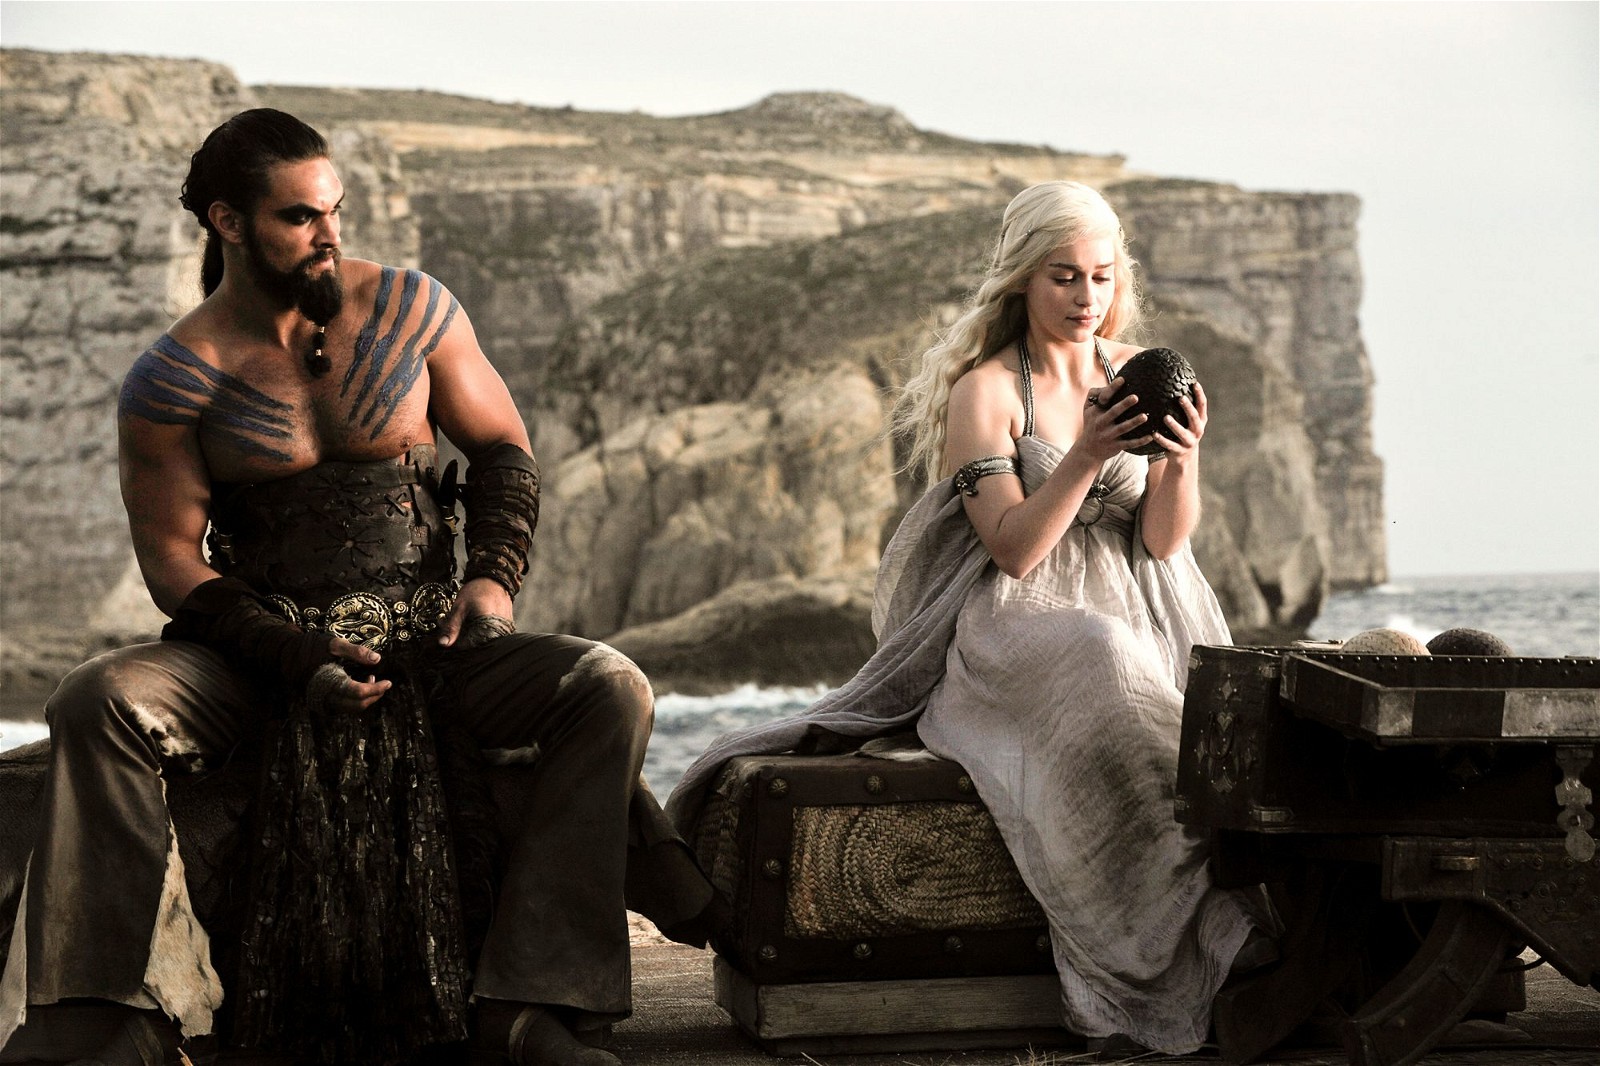 Jason Momoa and Emilia Clarke in Game of Thrones (2011 - 2019).